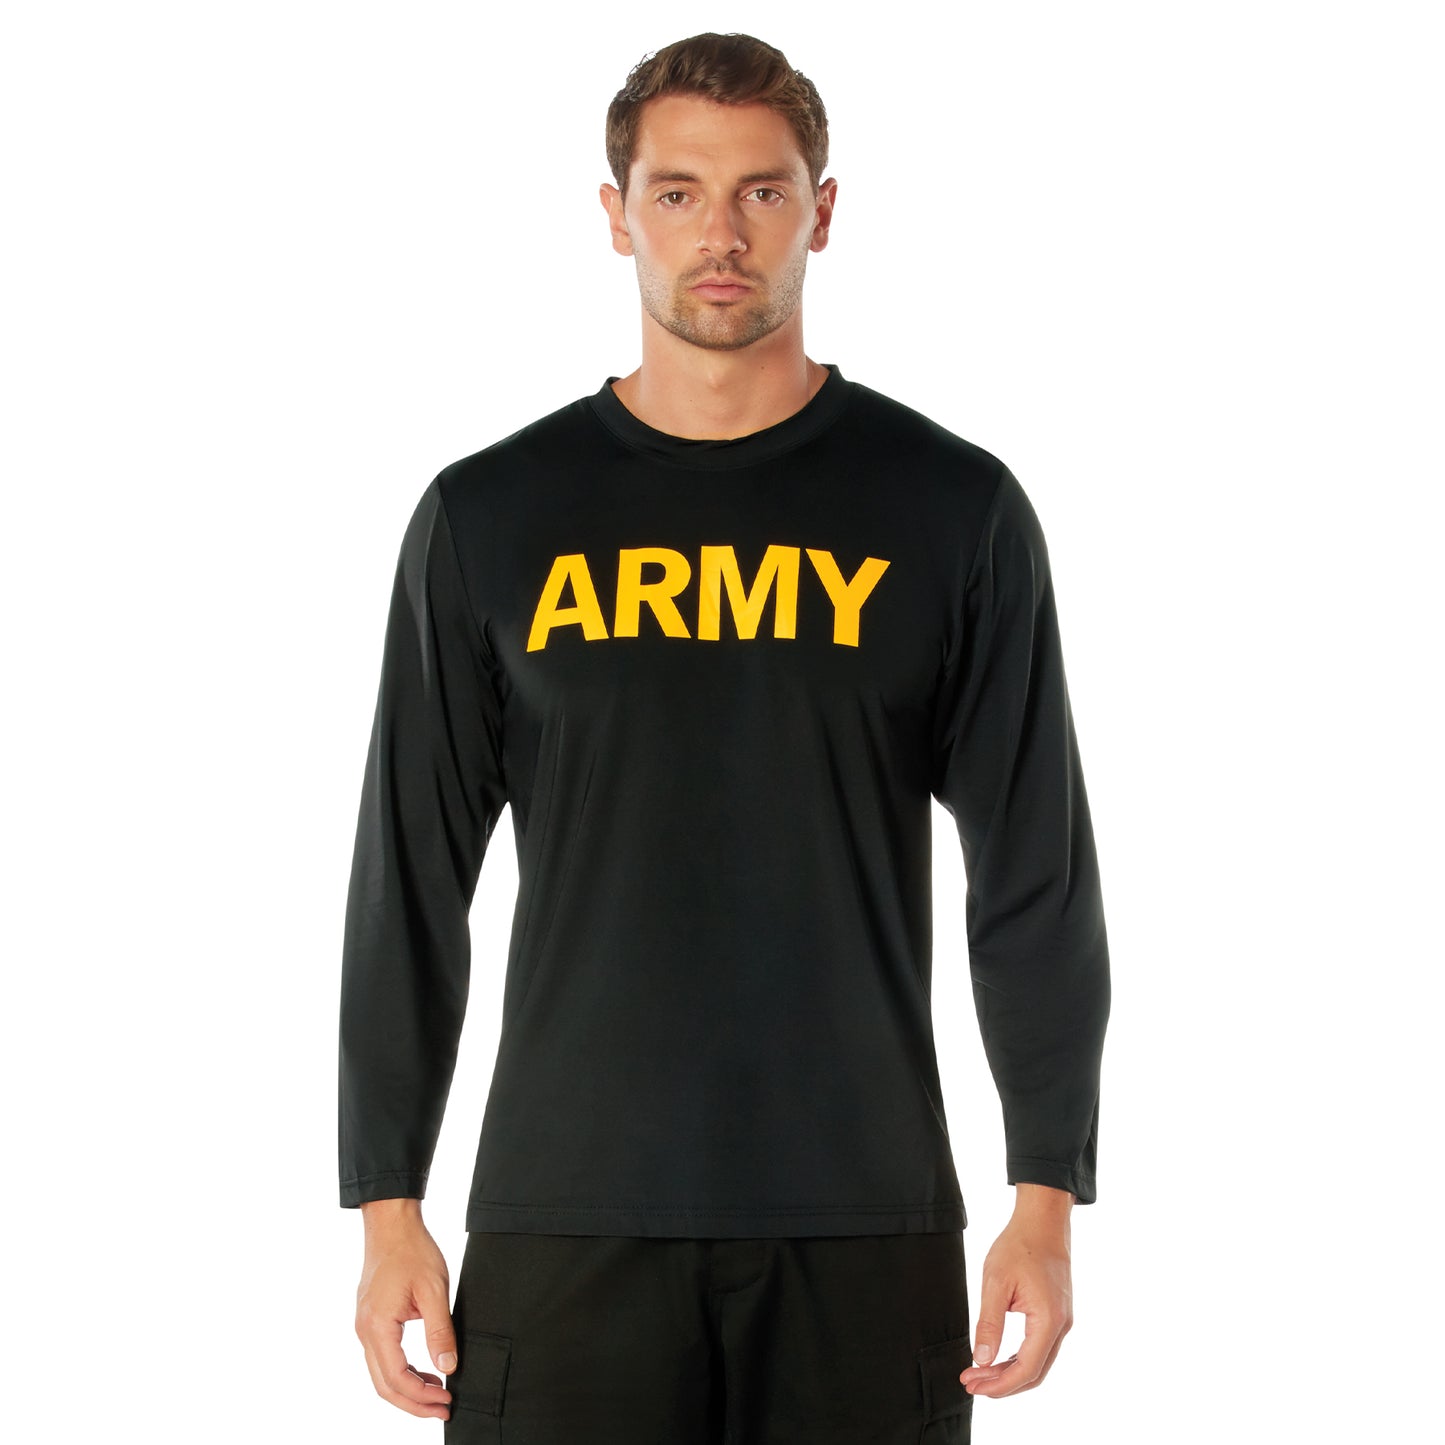 Rothco Long Sleeve Army PT Shirt Moisture Wicking - Black